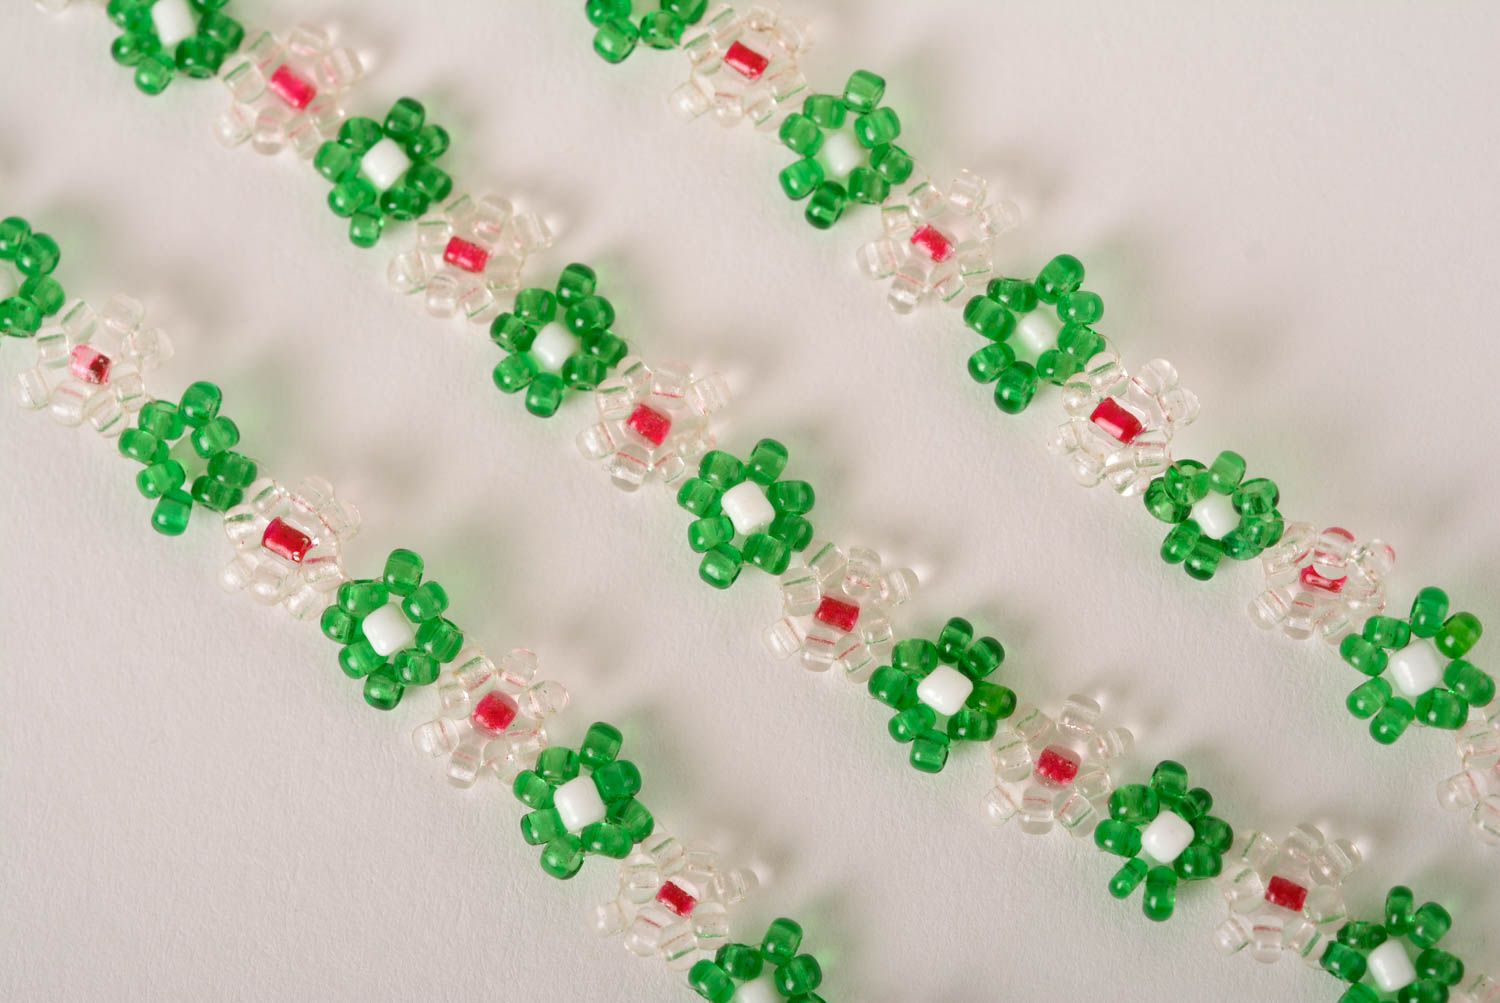 Stylish handmade beaded necklace cool jewelry designs bead weaving ideas photo 5